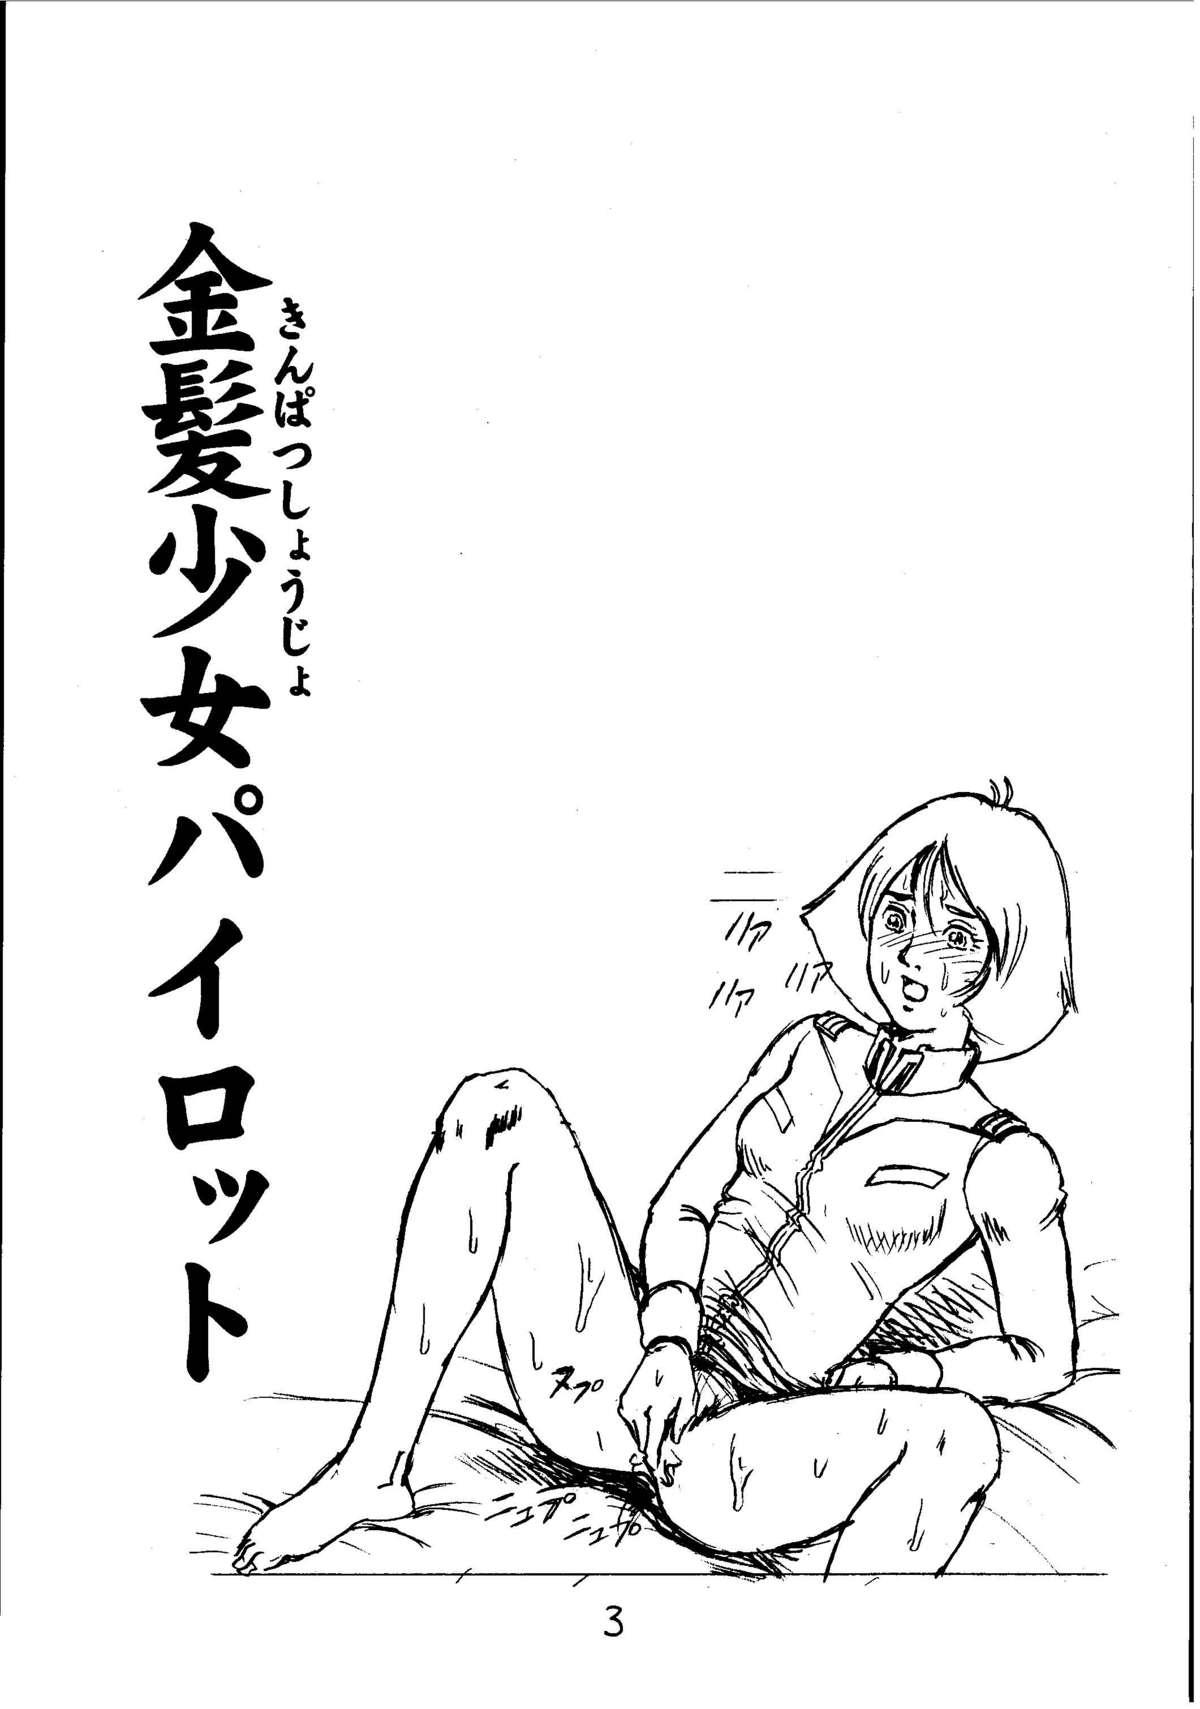 Forbidden Kinpatsu Shoujo Pilot - Mobile suit gundam Foot Worship - Page 2